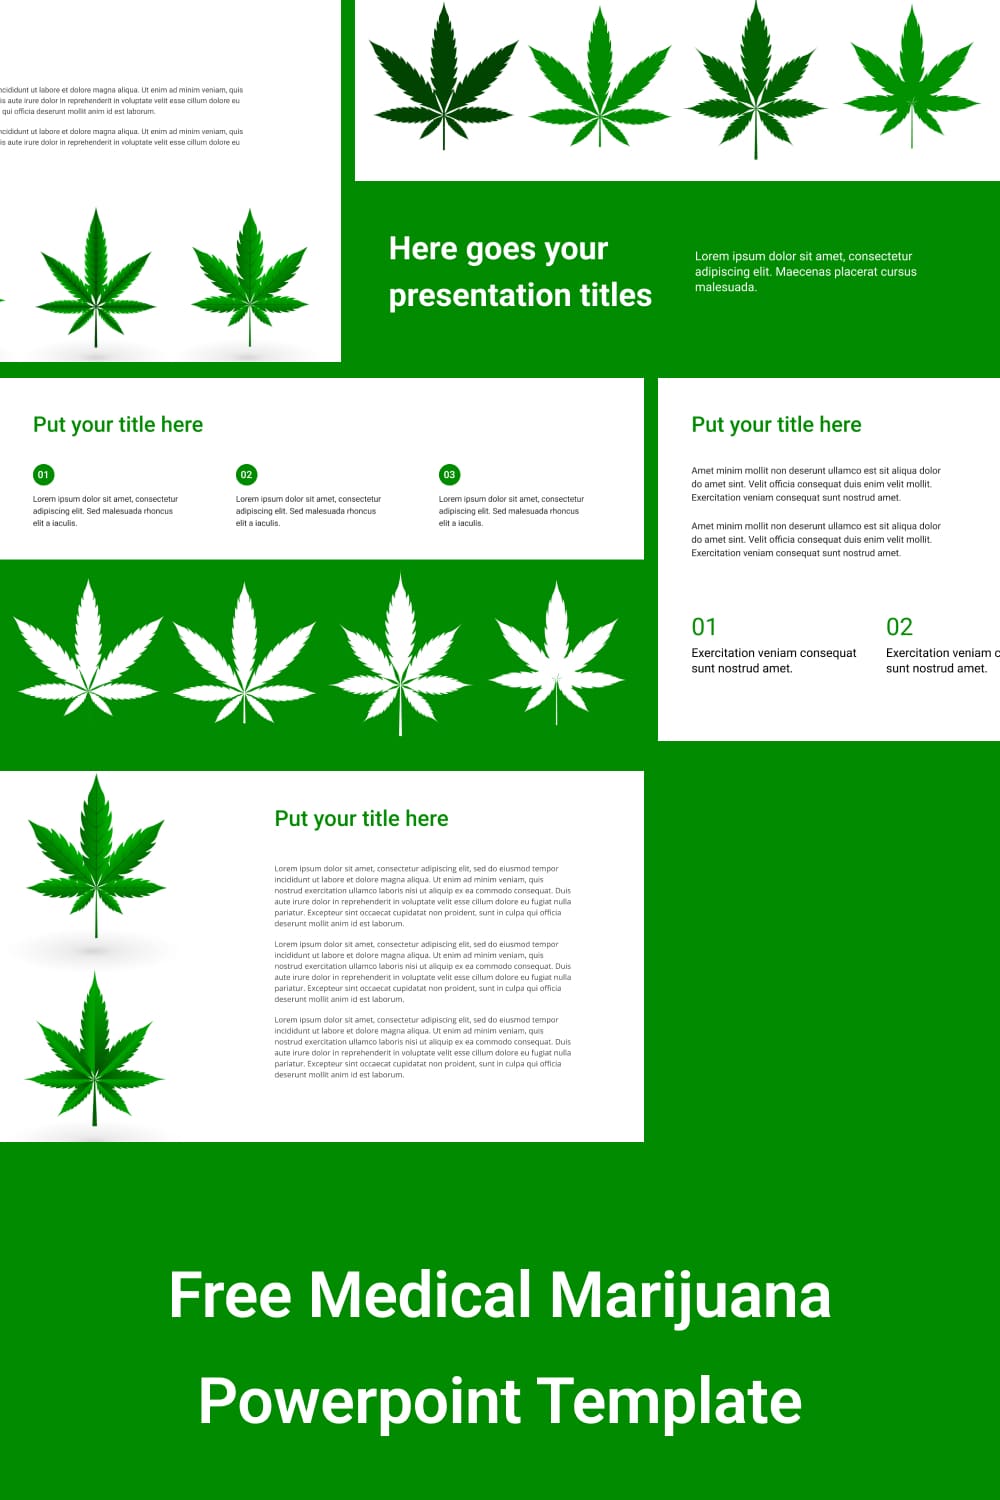 Pint Free Medical Marijuana Powerpoint Template.